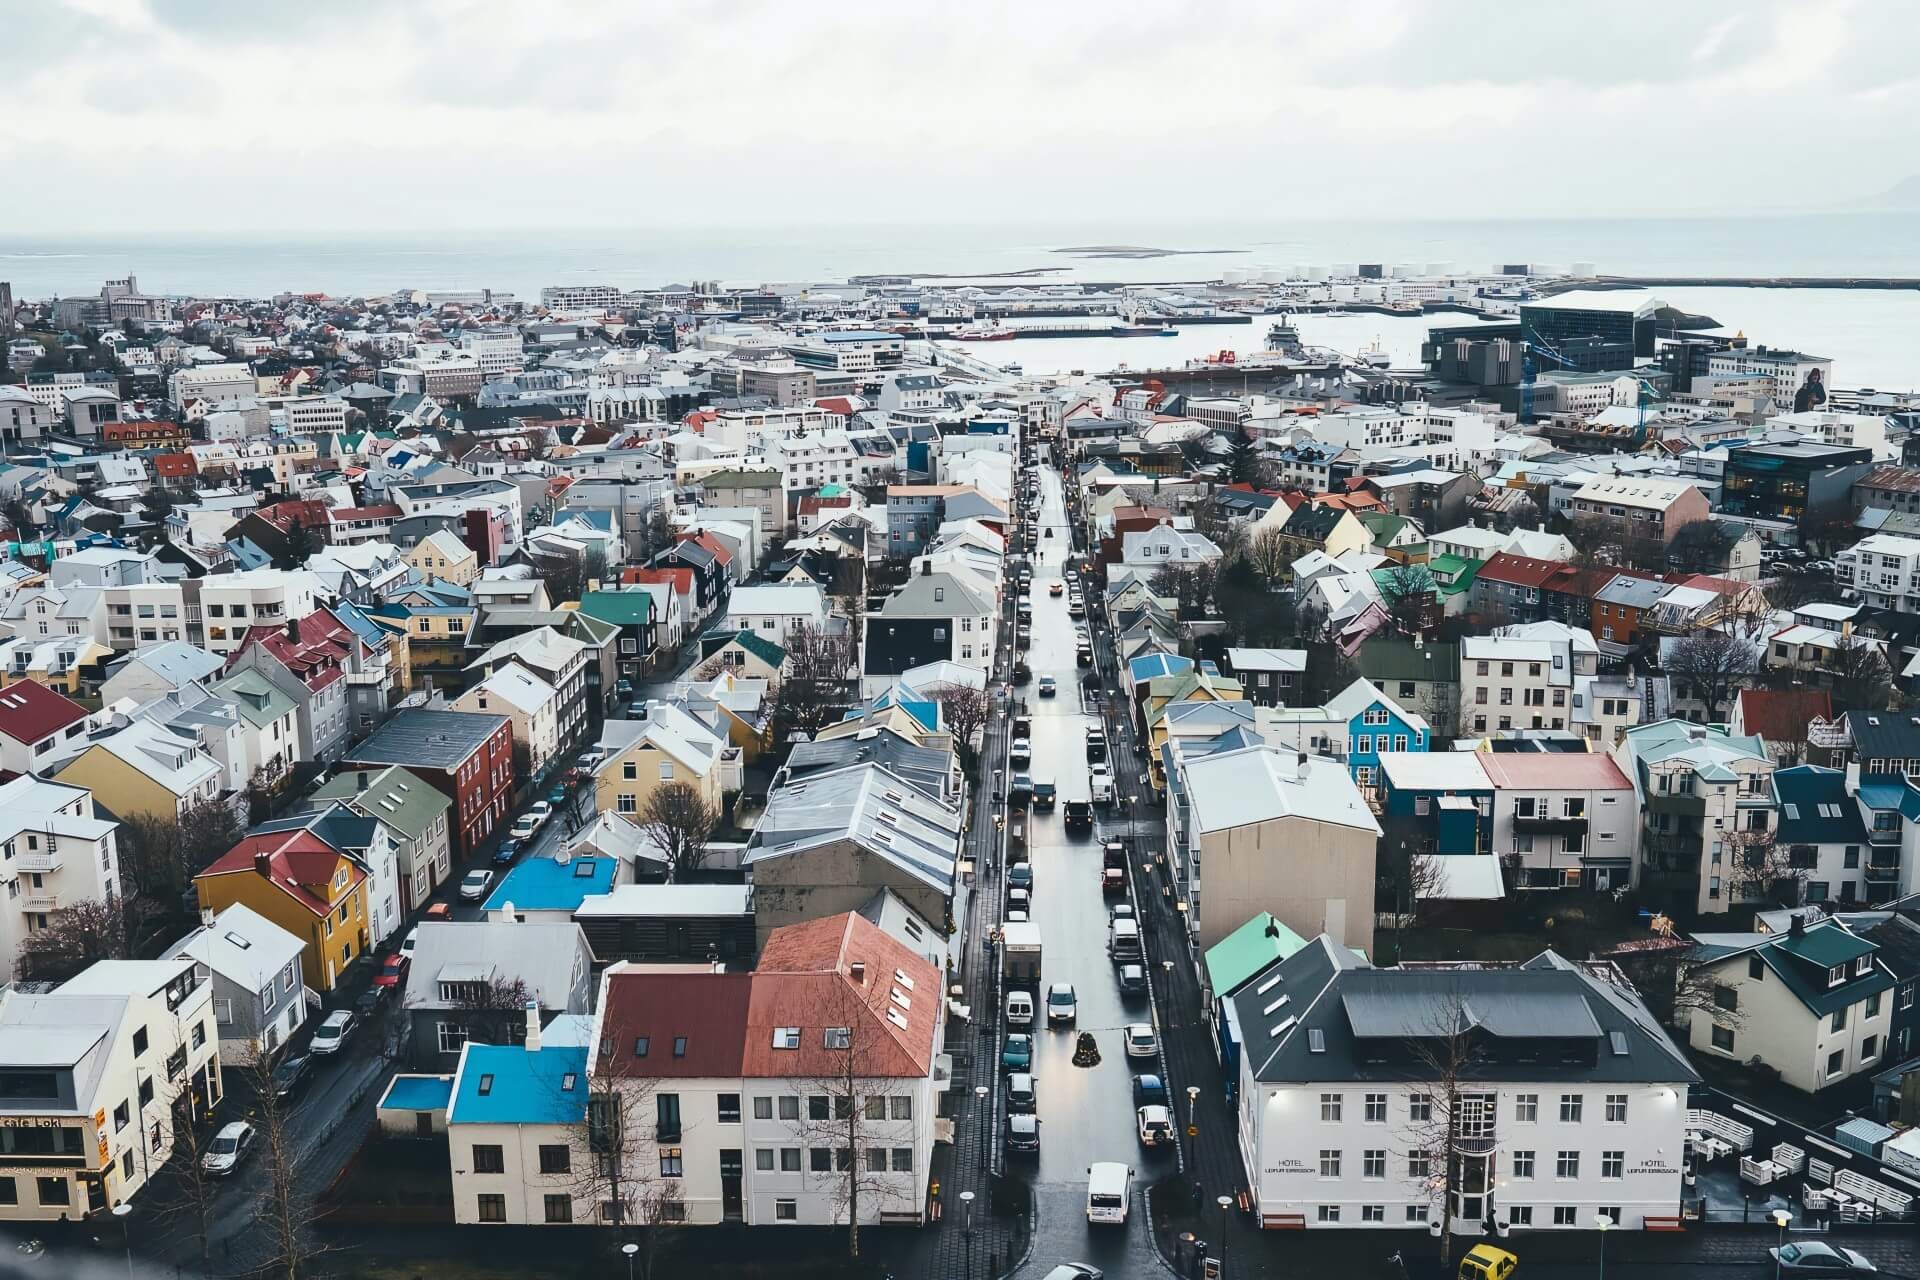 Is Reykjavik expensive?